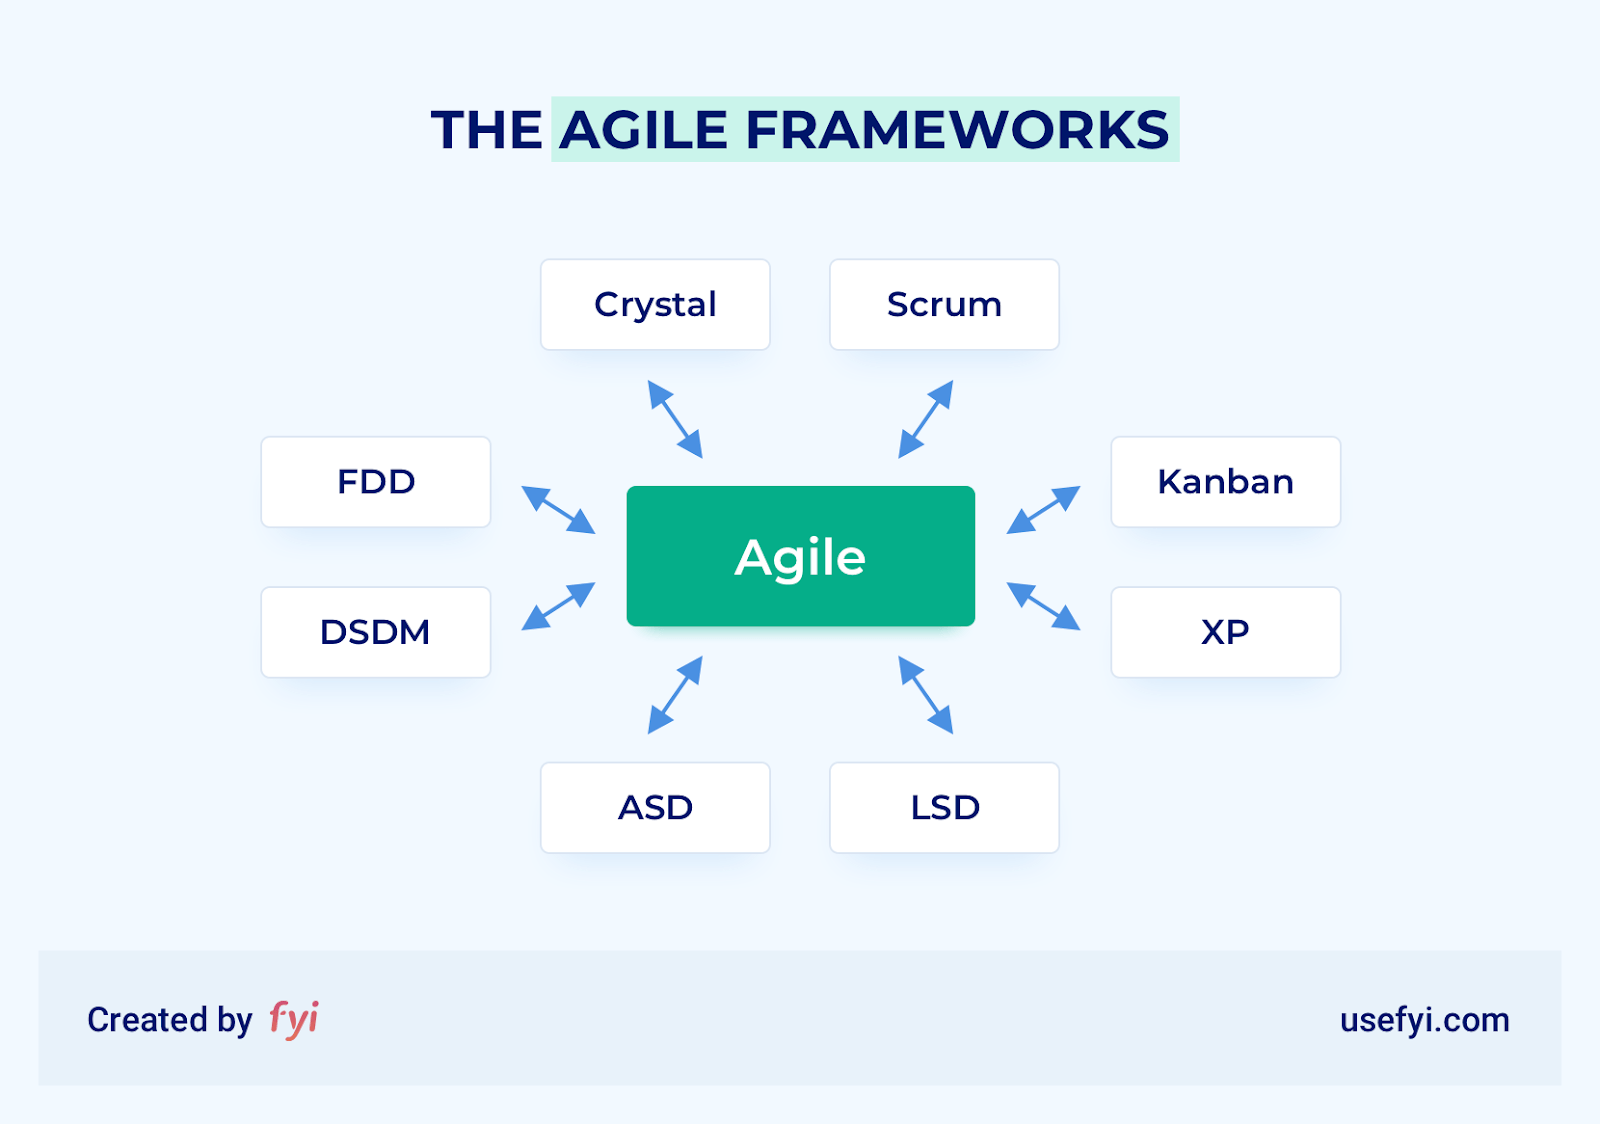 agile frameworks